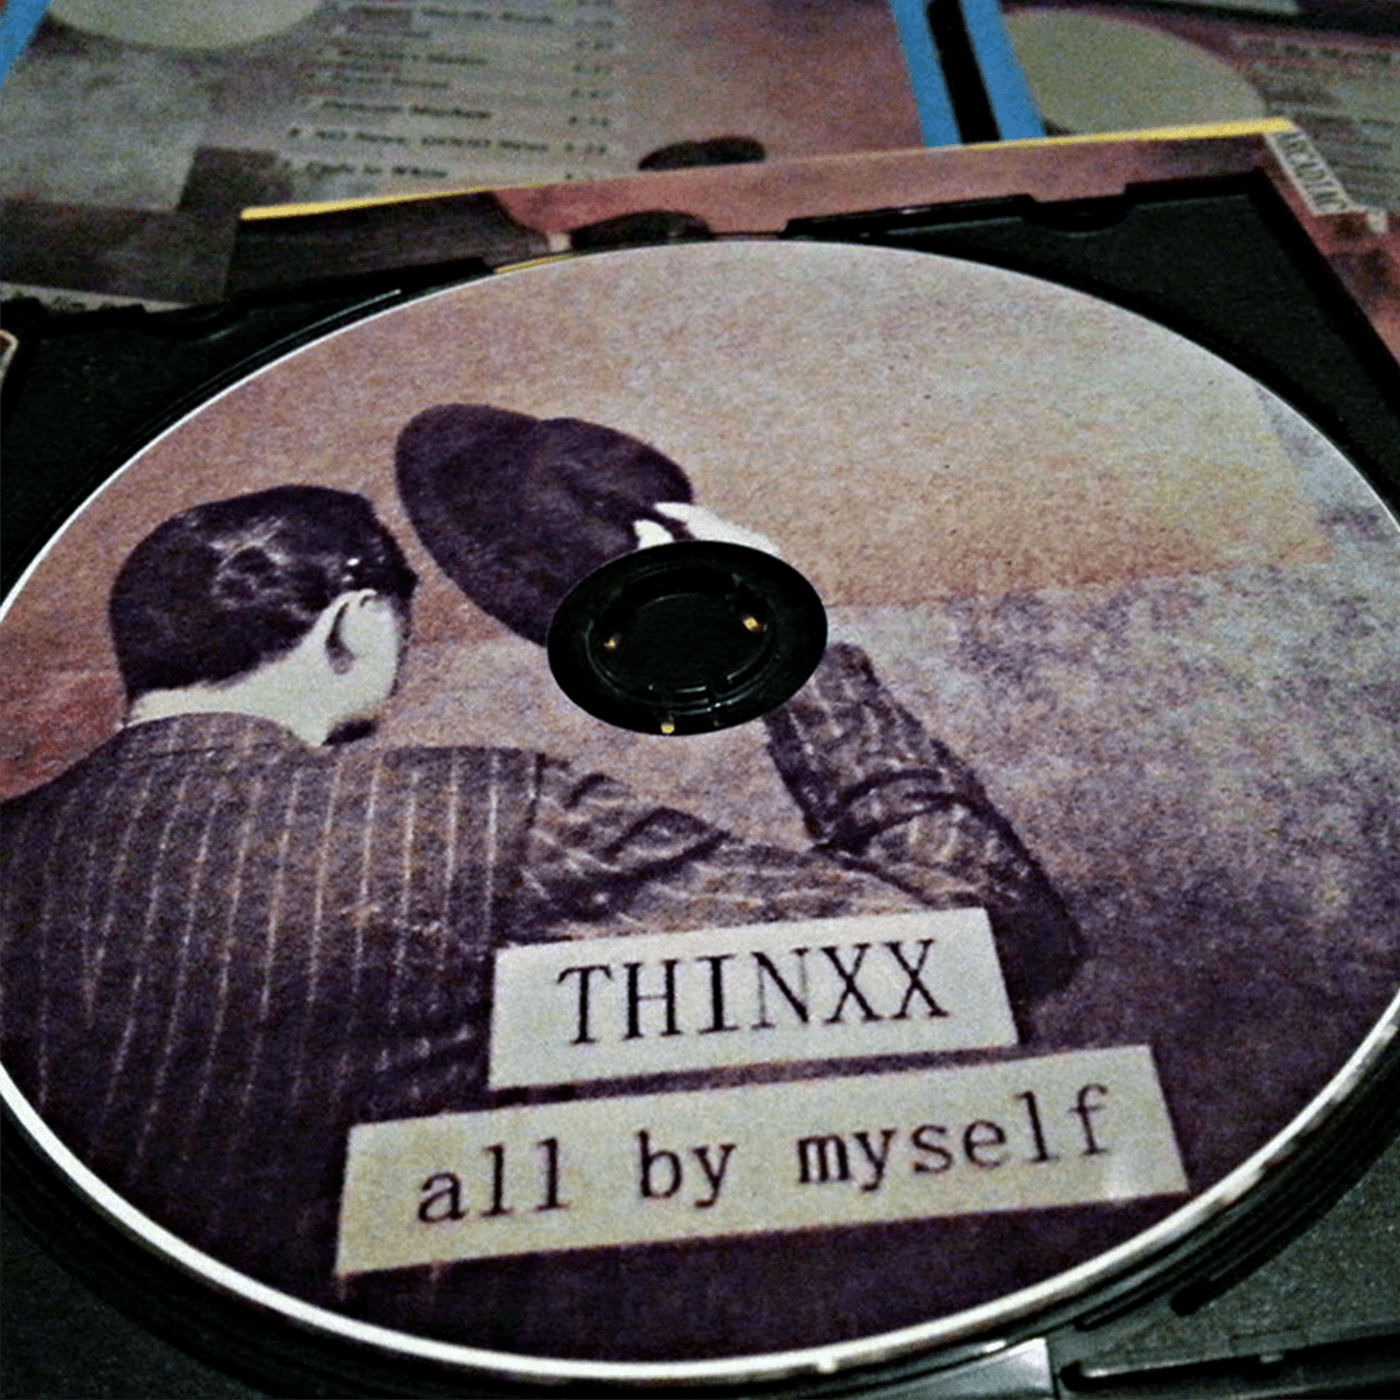 All-By-Myself-cd-inside